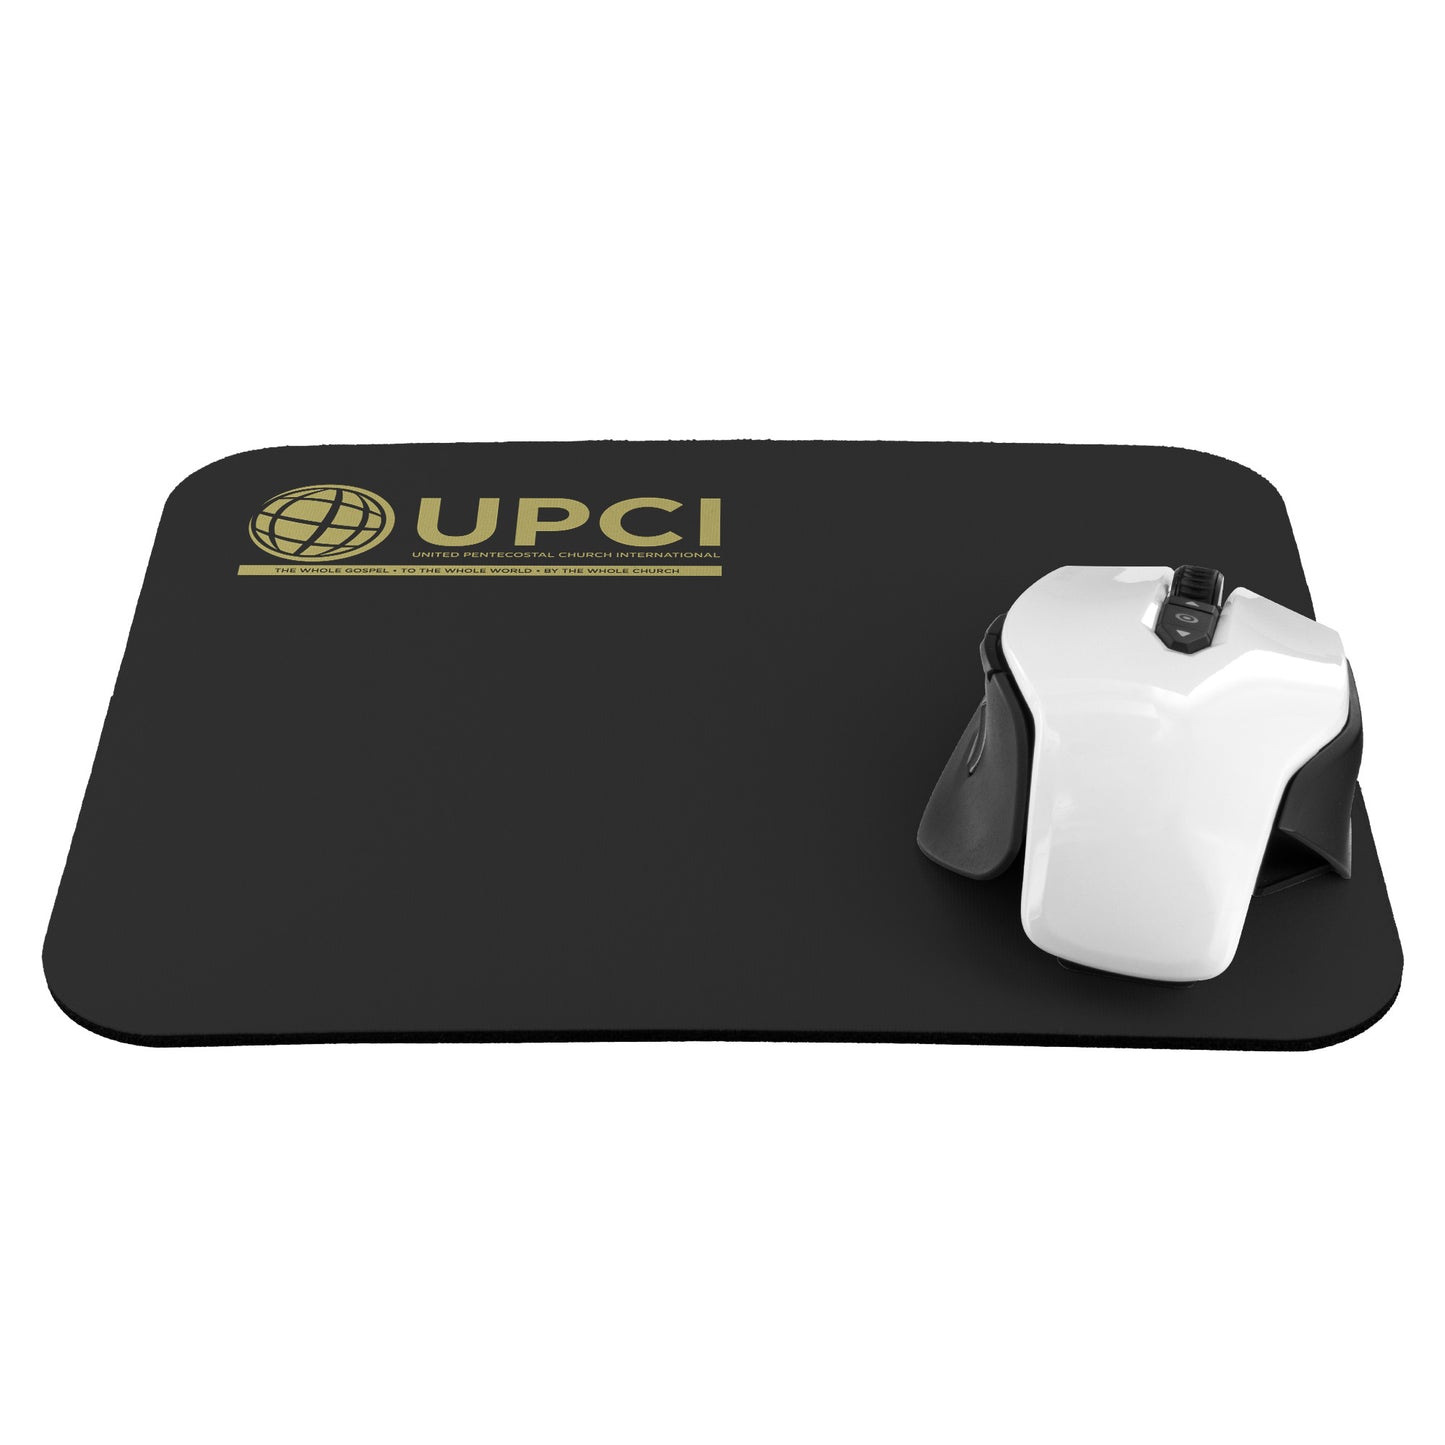 UPCI - Mousepad